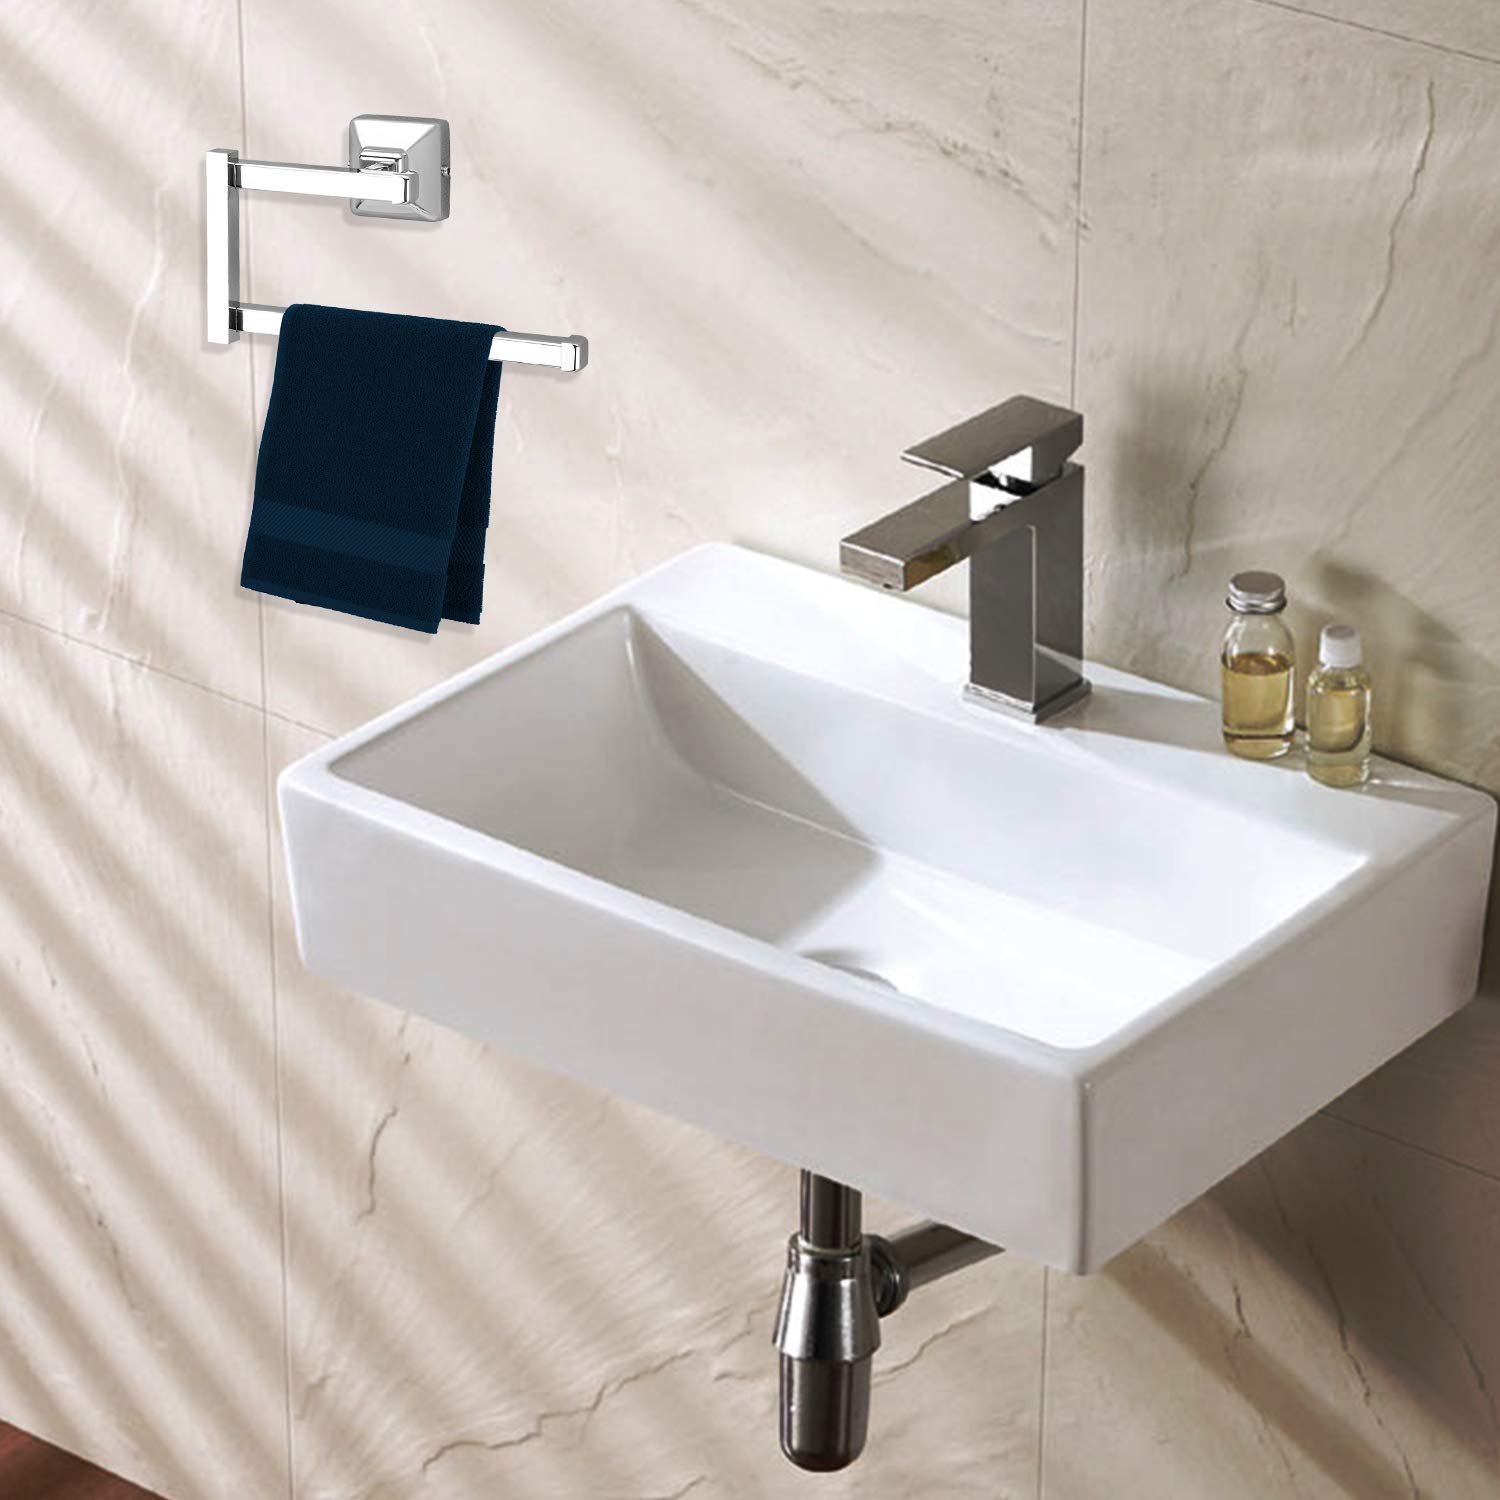 Plantex Stainless Steel 304 Grade Squaro Napkin Ring/Towel Ring /Napkin Holder/Towel Hanger/Bathroom Accessories(Chrome) - Pack of 3